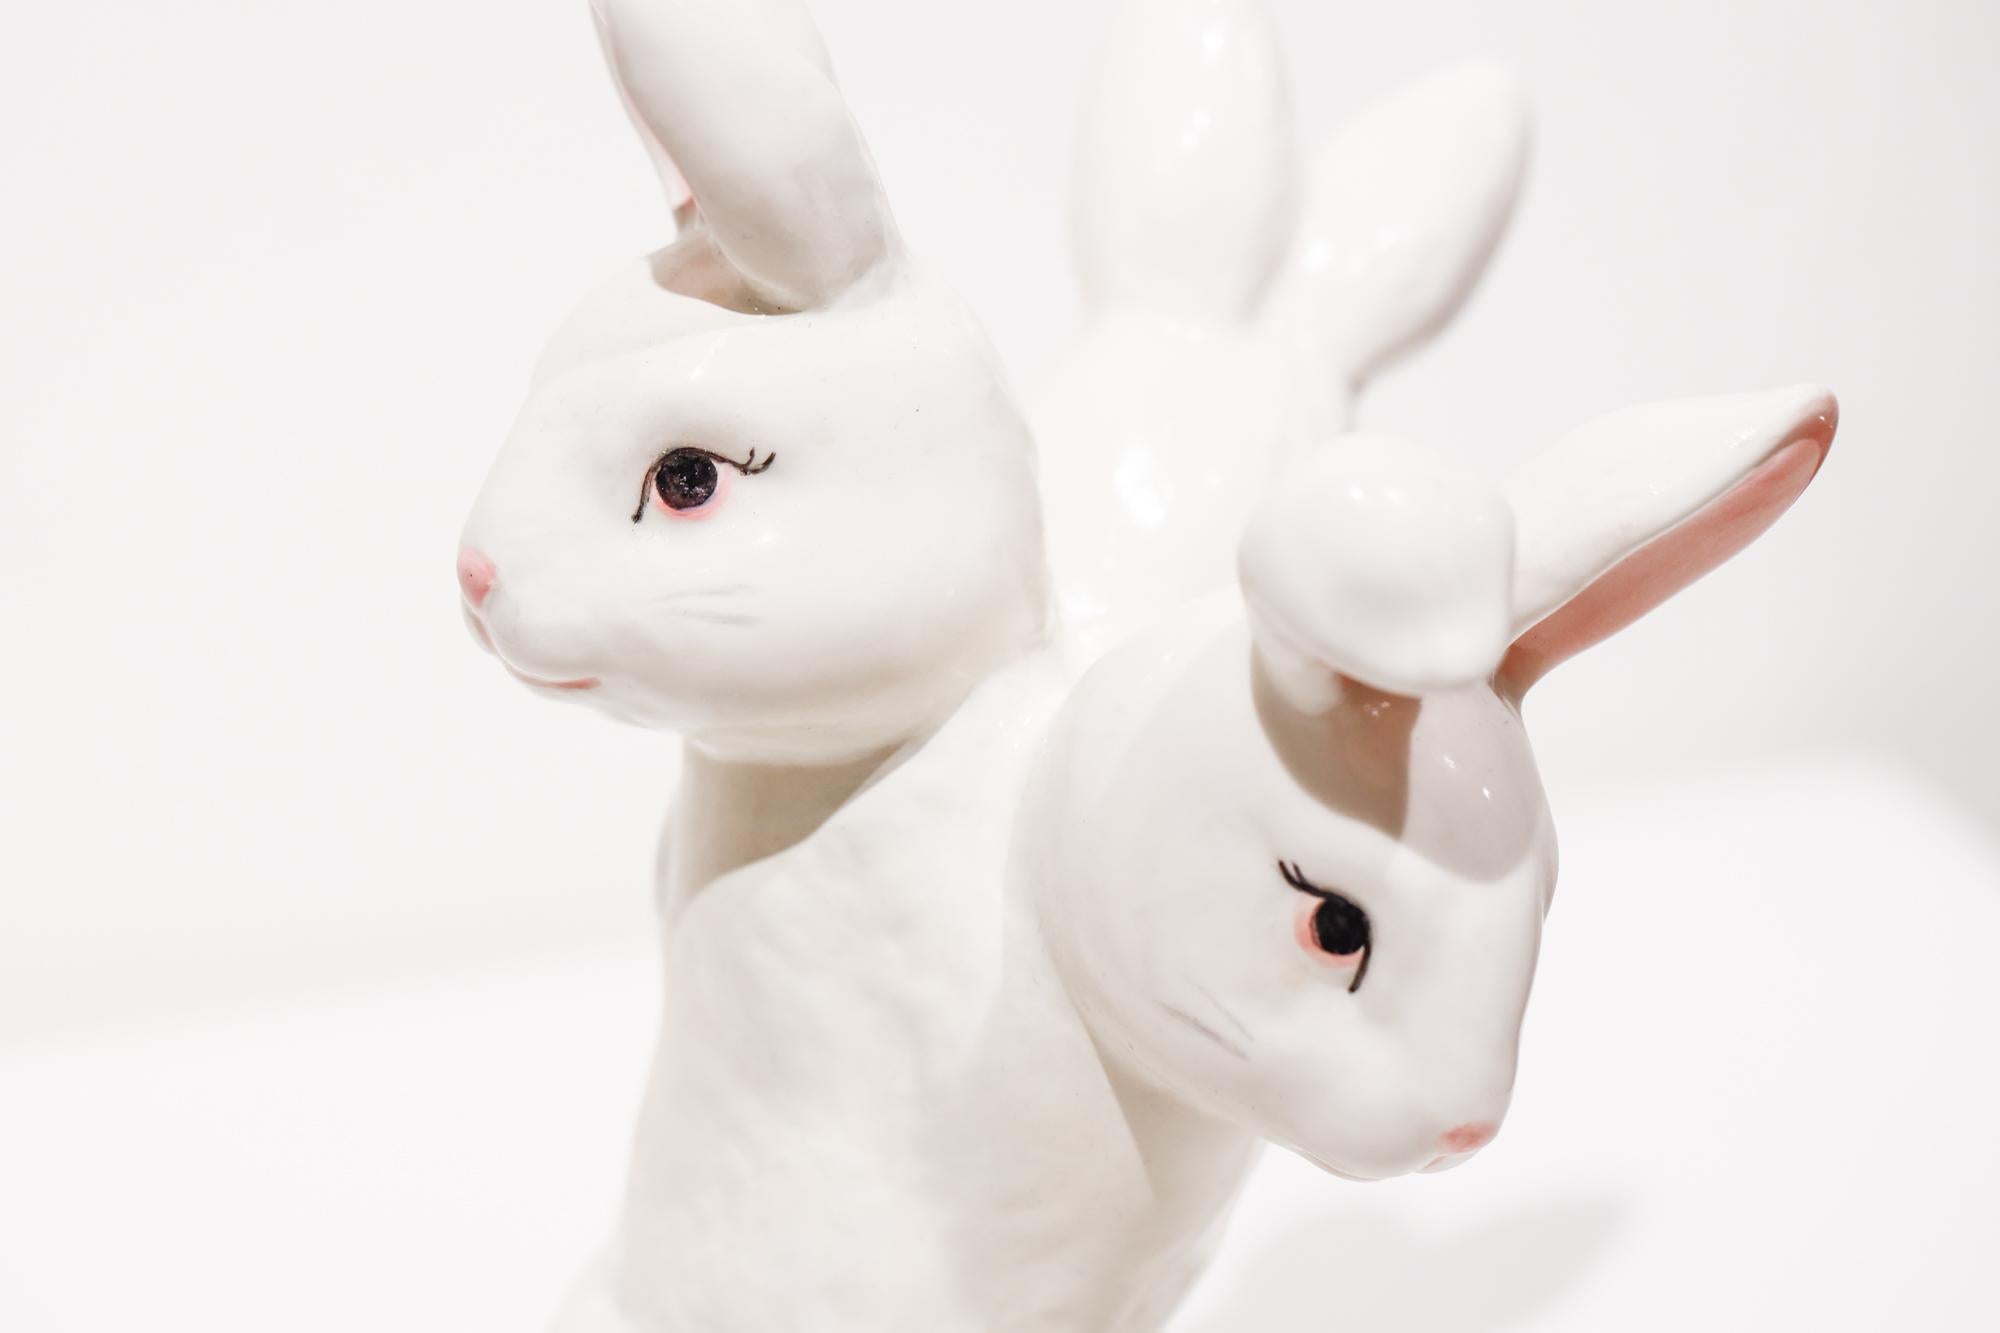 Rabbit Rabbit Rabbit - Sculpture by Debra Broz